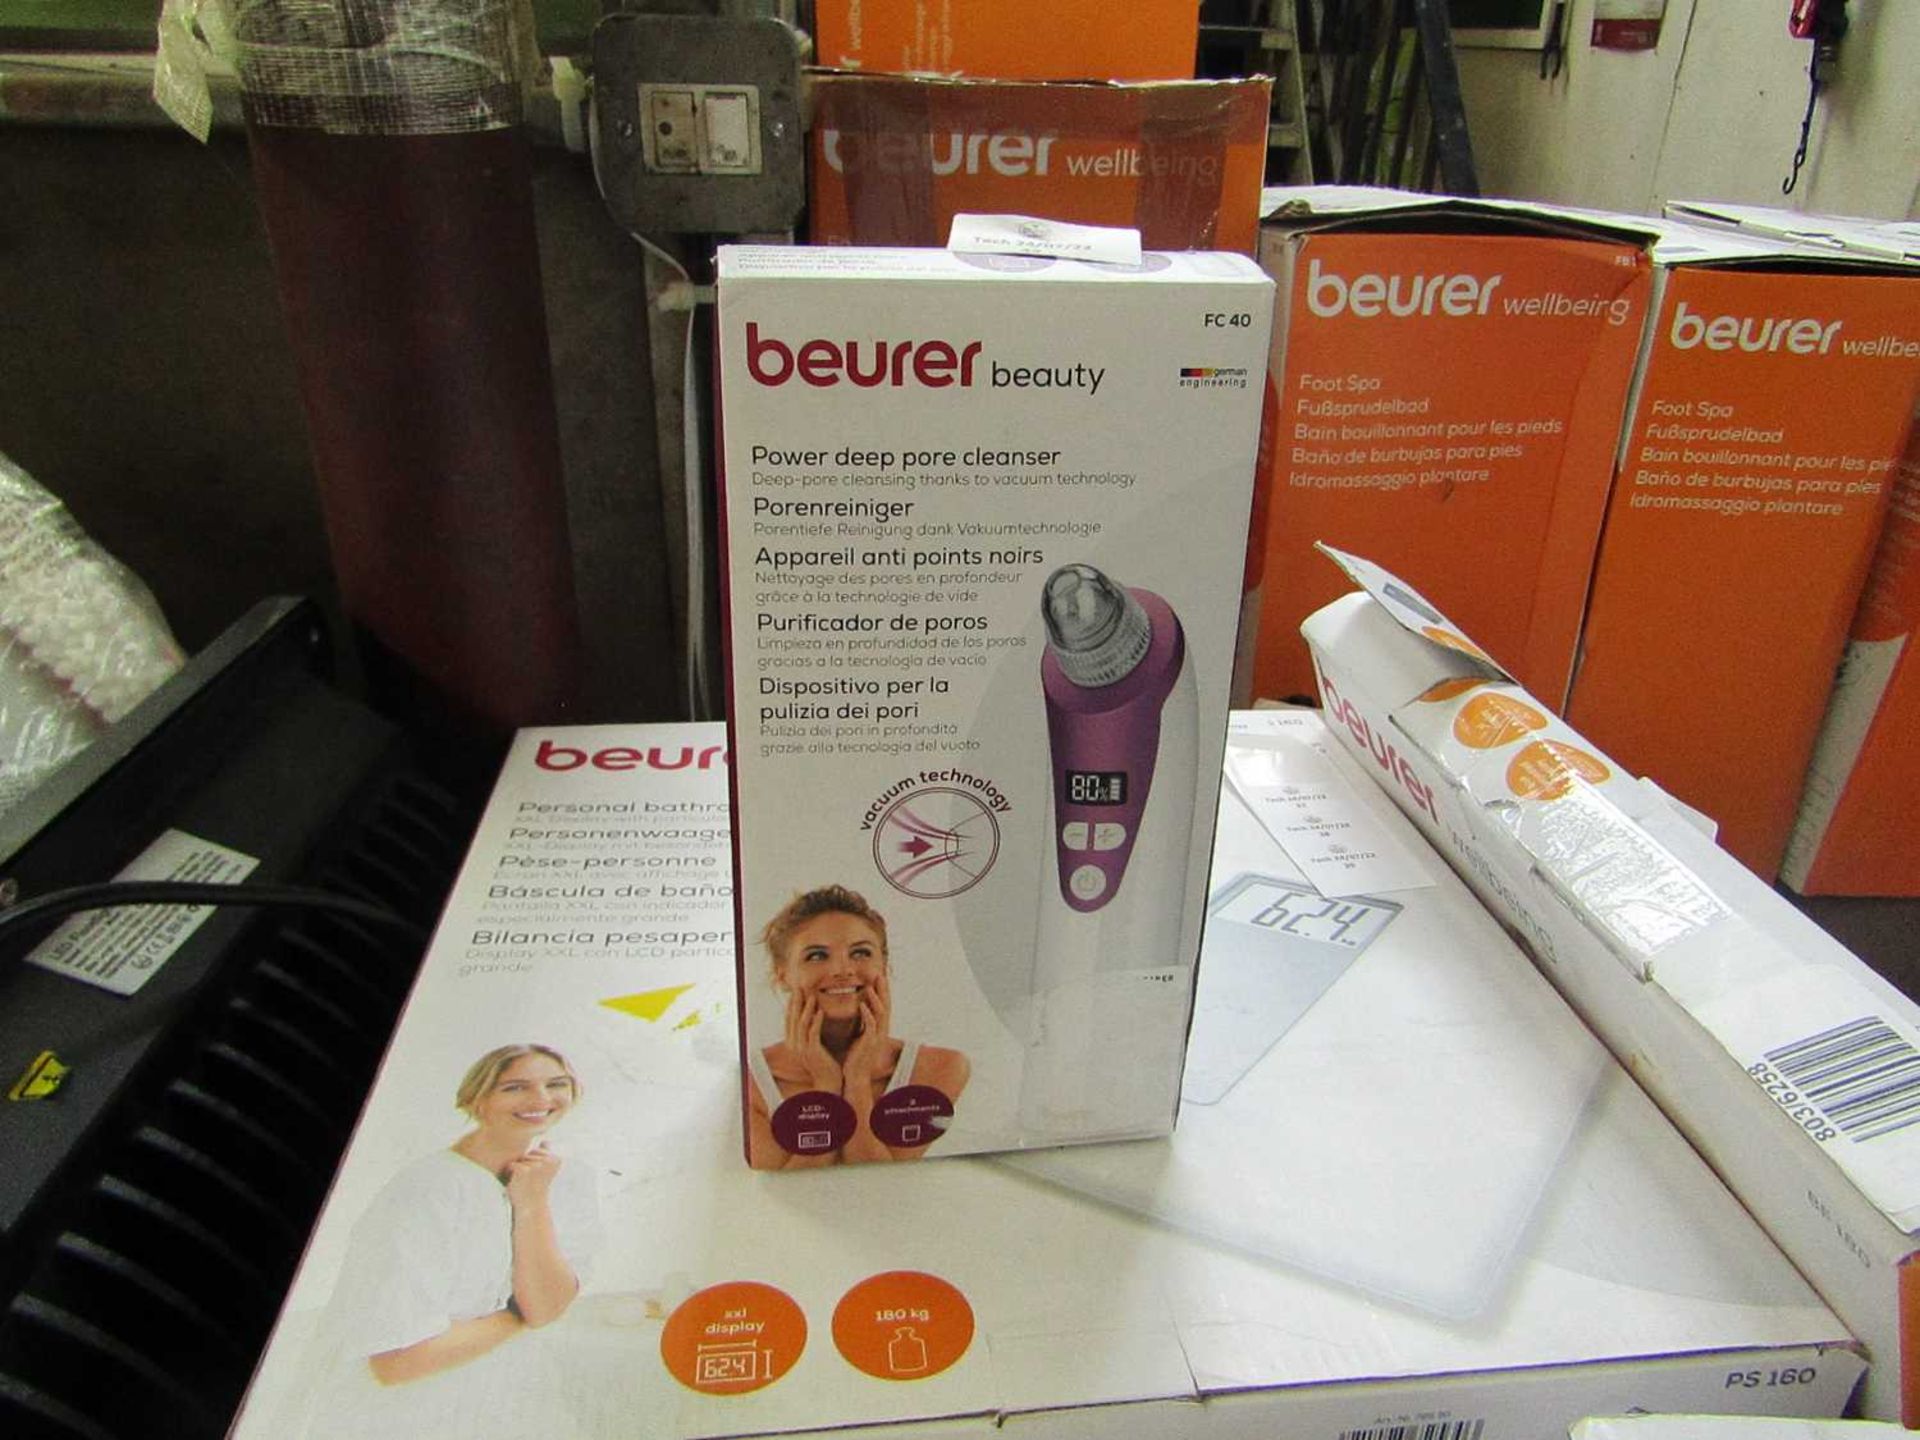 VAT 1x Beurer Beauty Power Deep Pore Cleanser FC40 - This item is graded B - RRP œ30